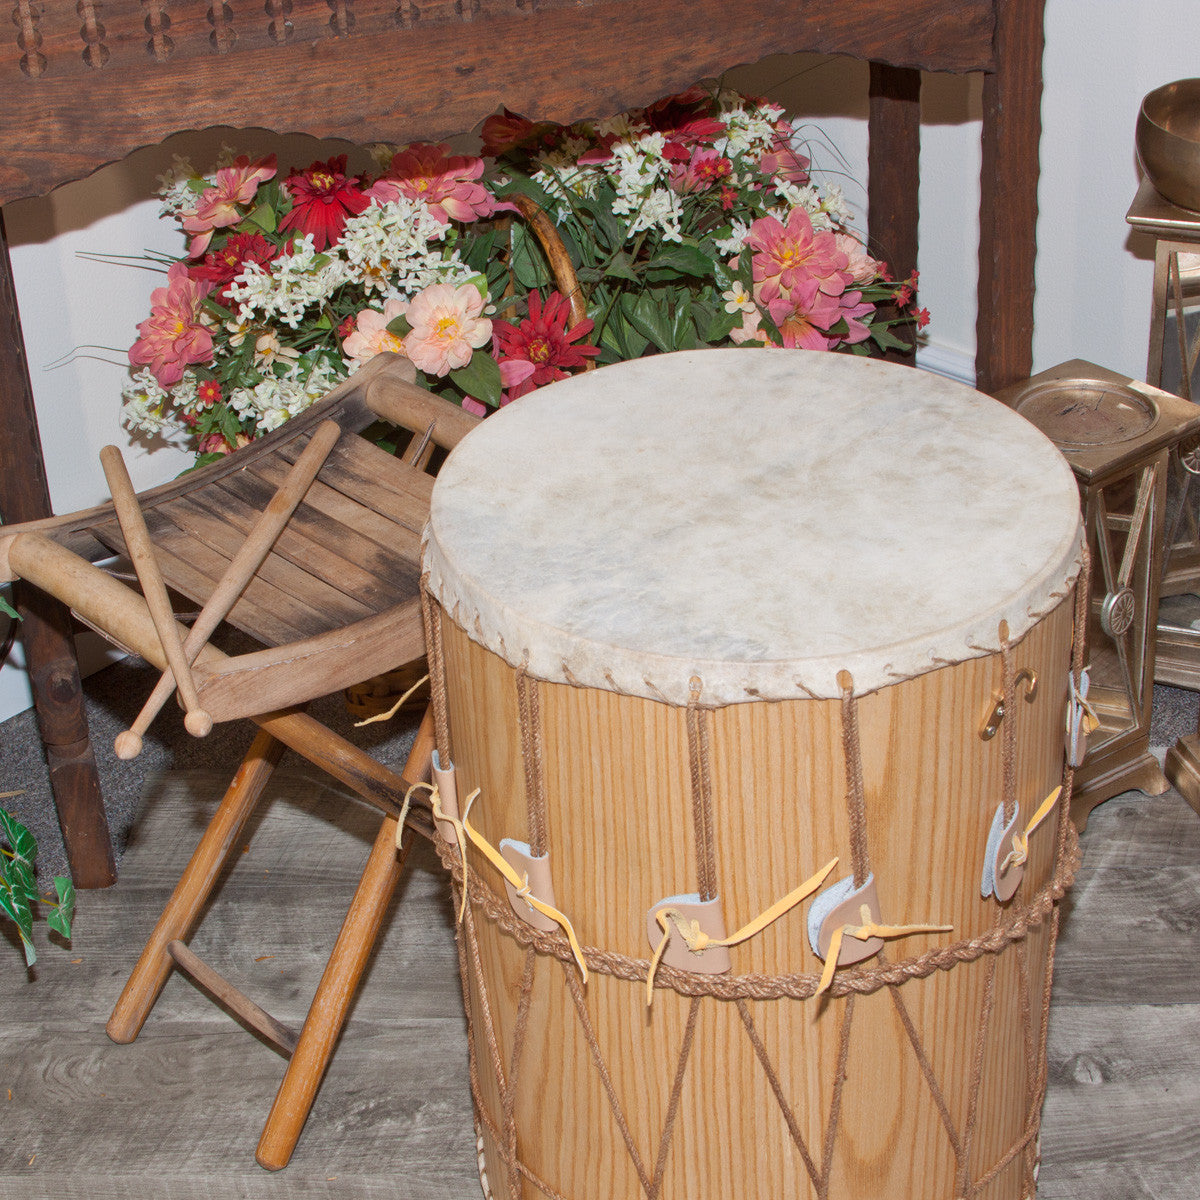 EMS Medieval Drum, 13" x 19" Renaissance Drums Early Music Shop   